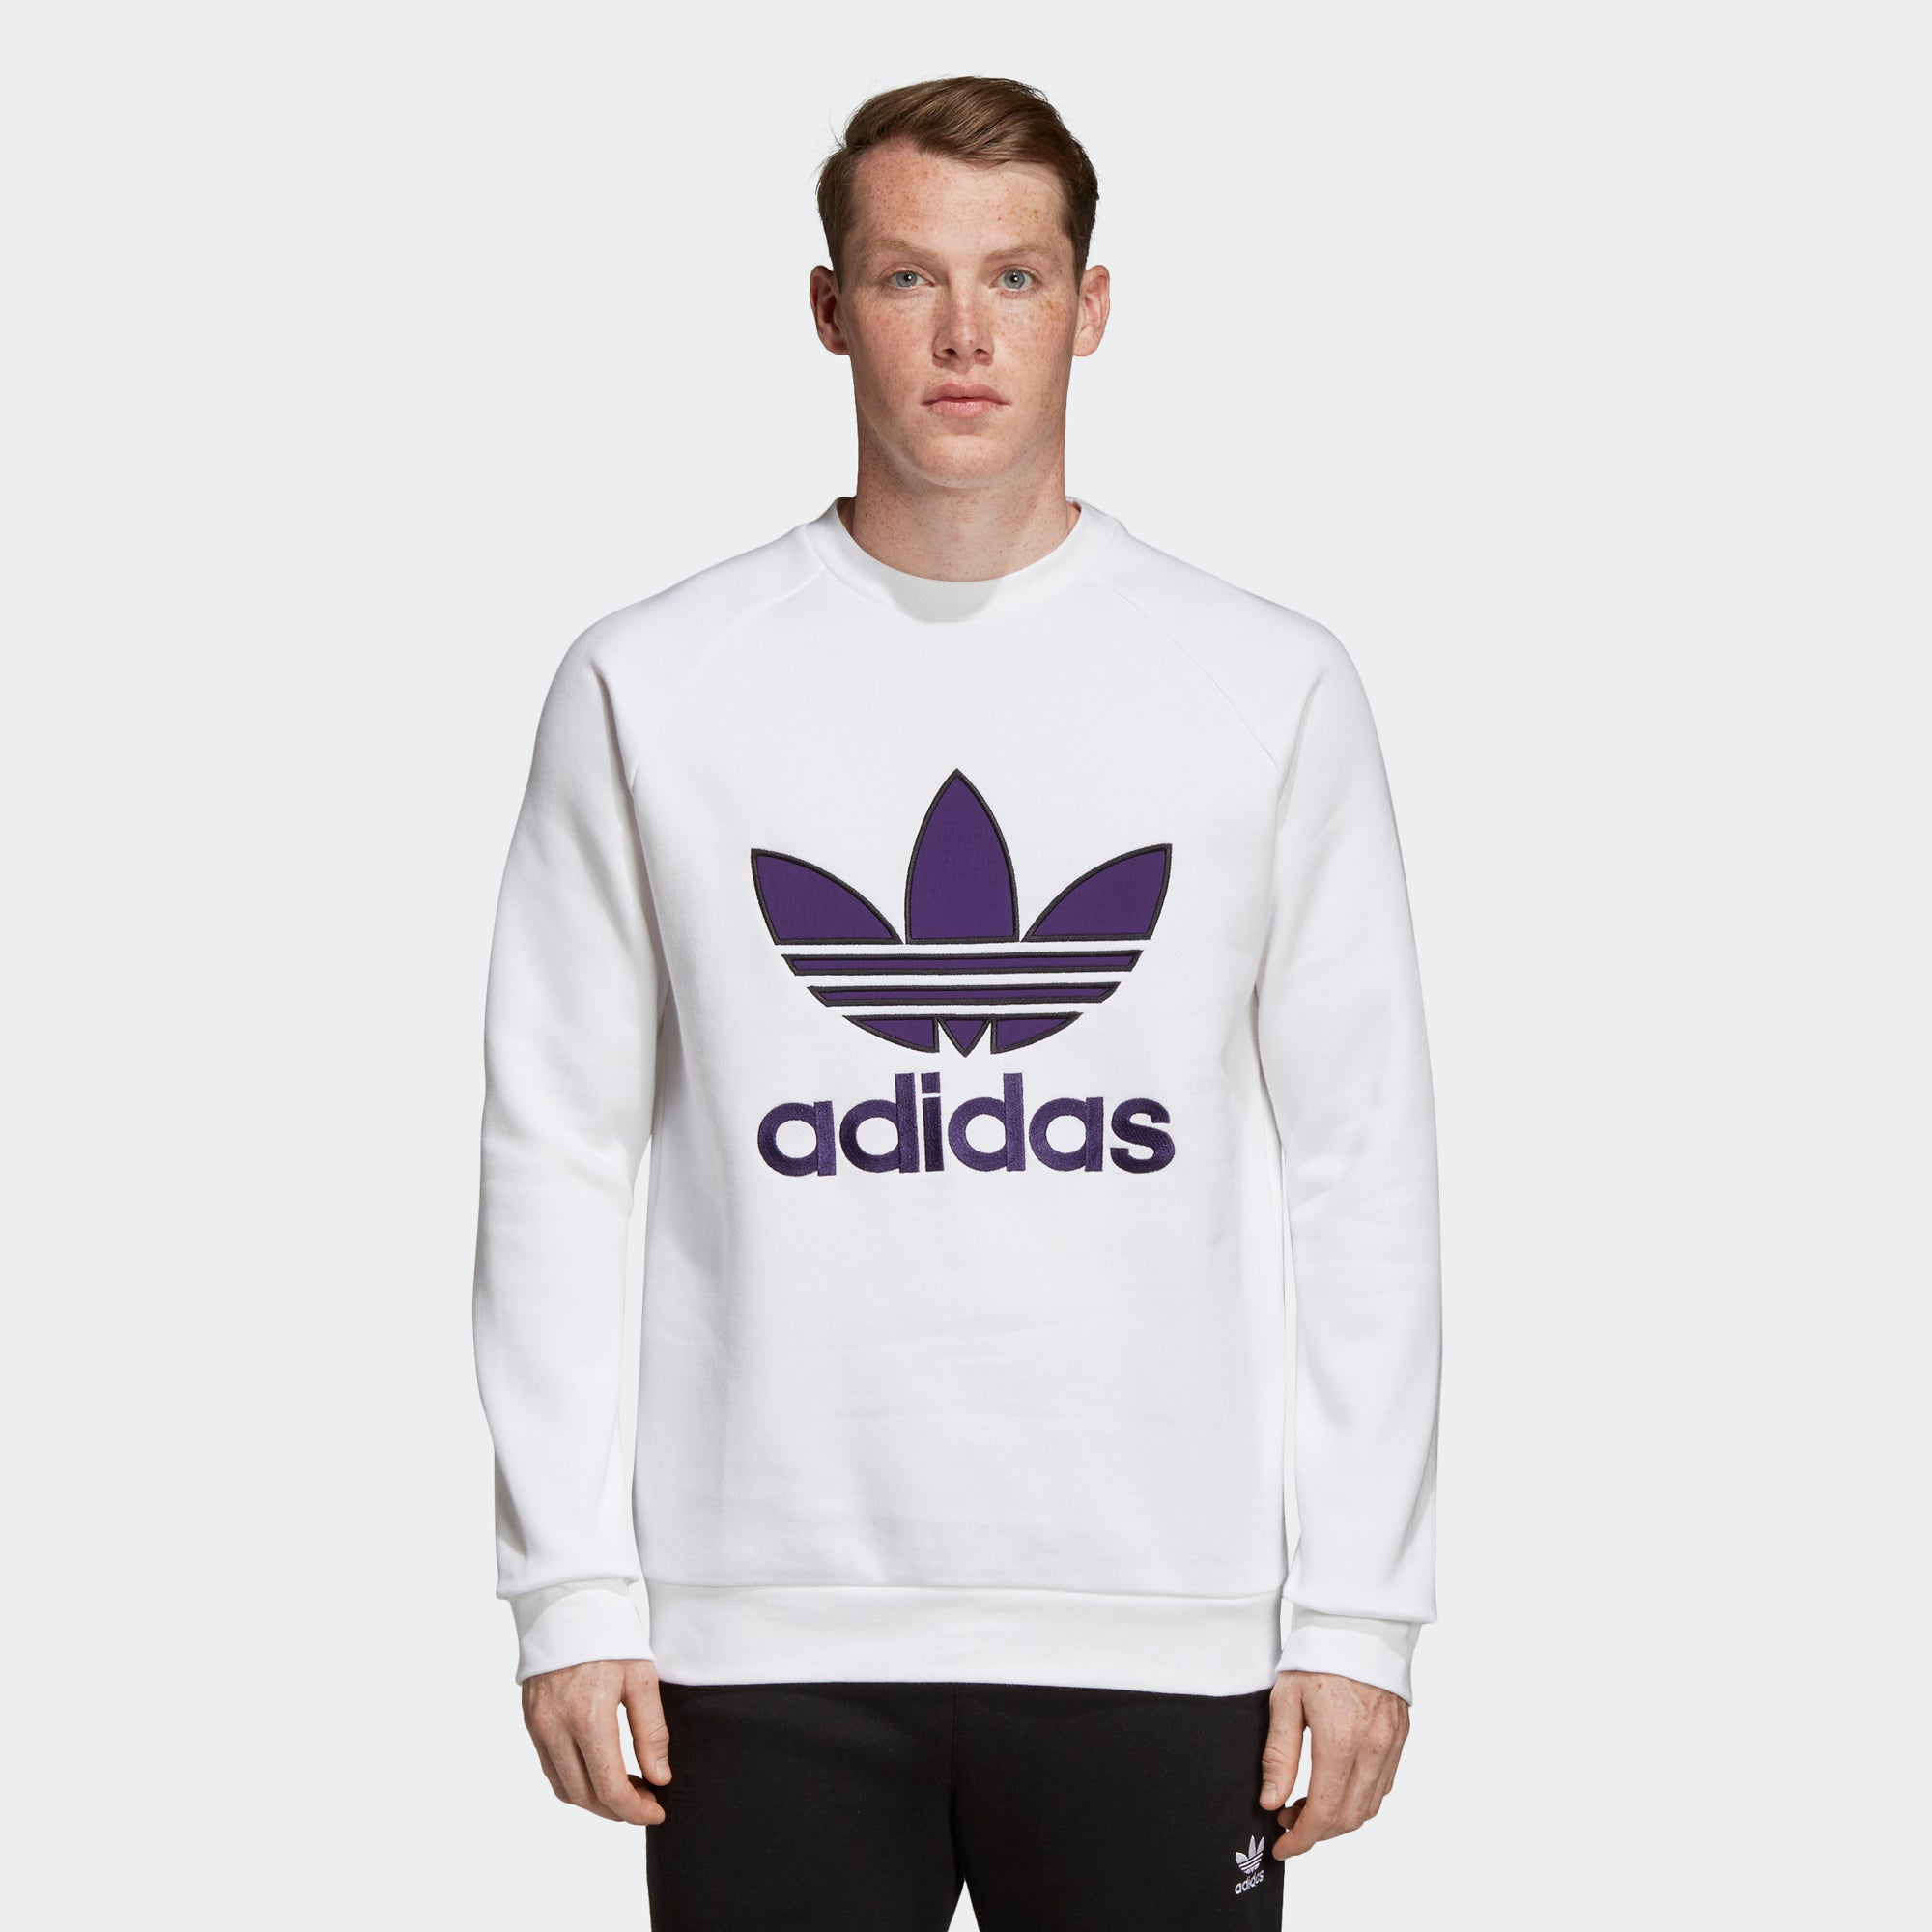 adidas originals applique trefoil sweatshirt